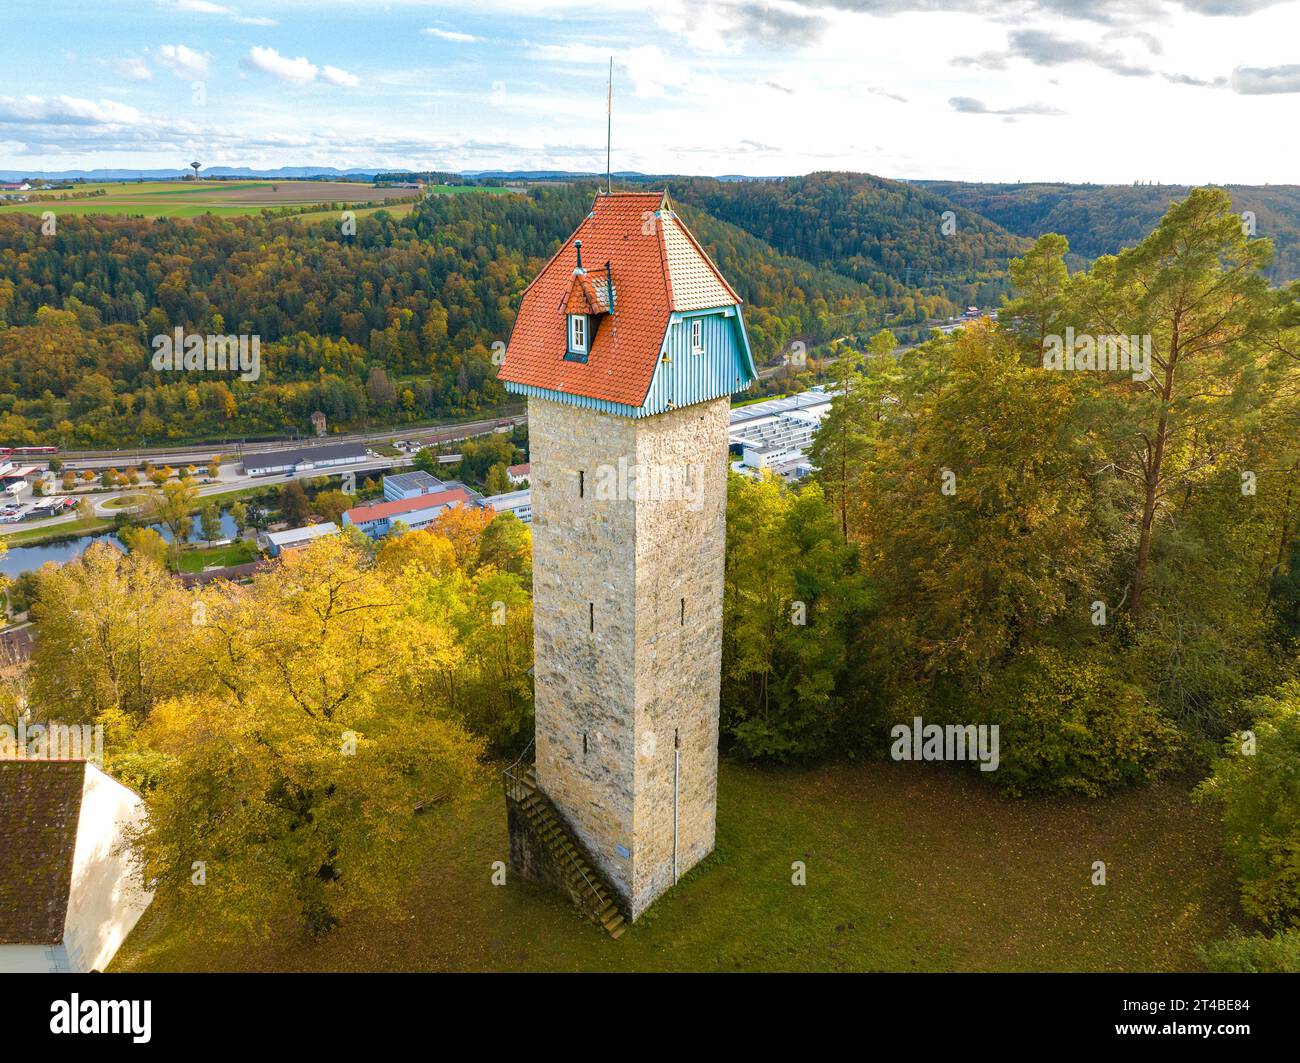 Historischer Turm im Herbstwald, Schuetteturm, Horb am Neckar, Deutschland Stockfoto